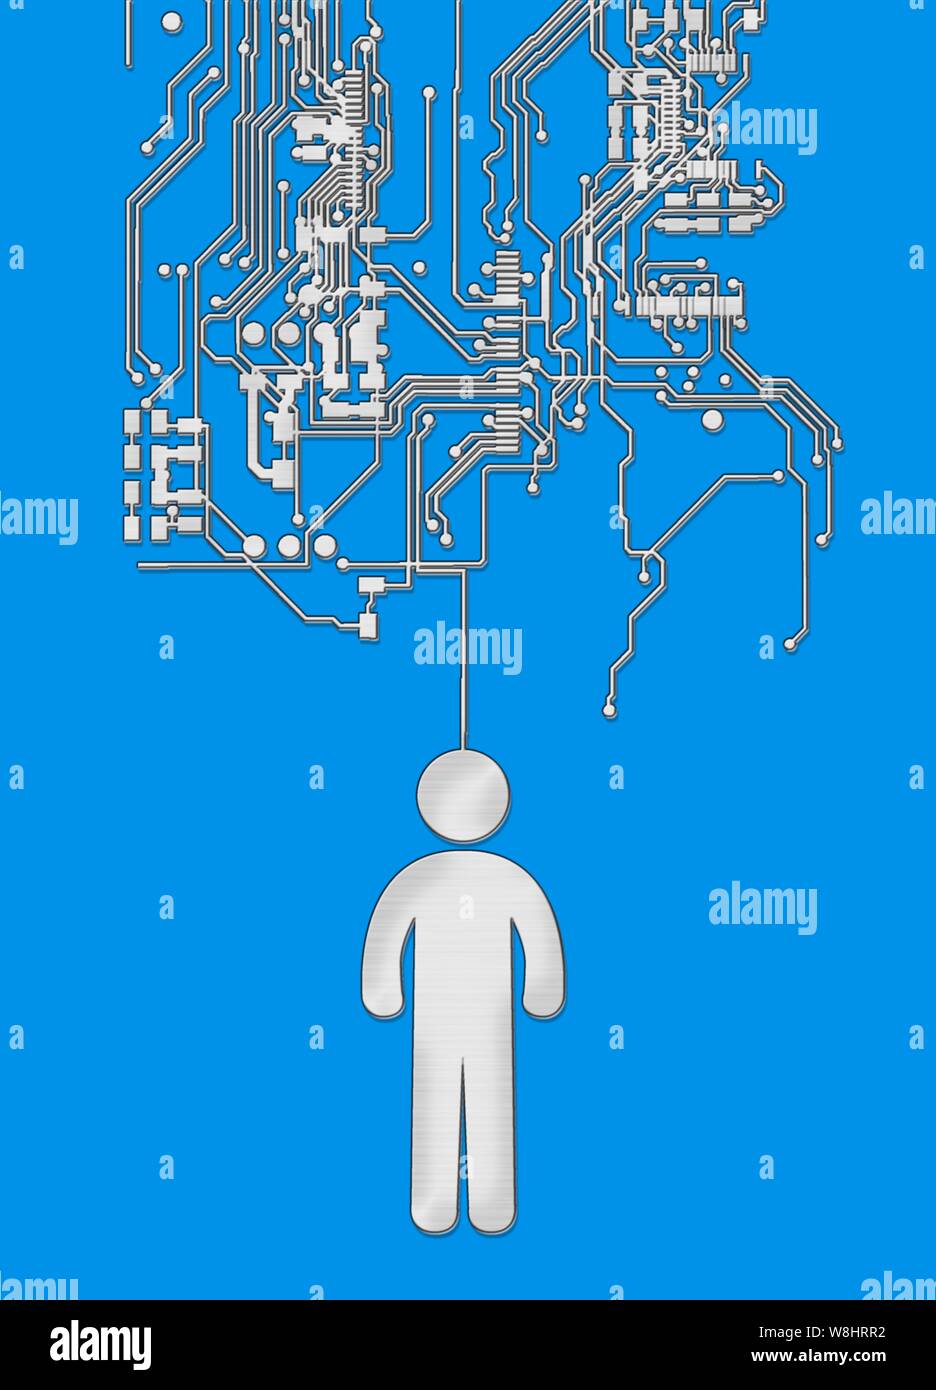 Human figure and circuit board, illustration. Stock Photo